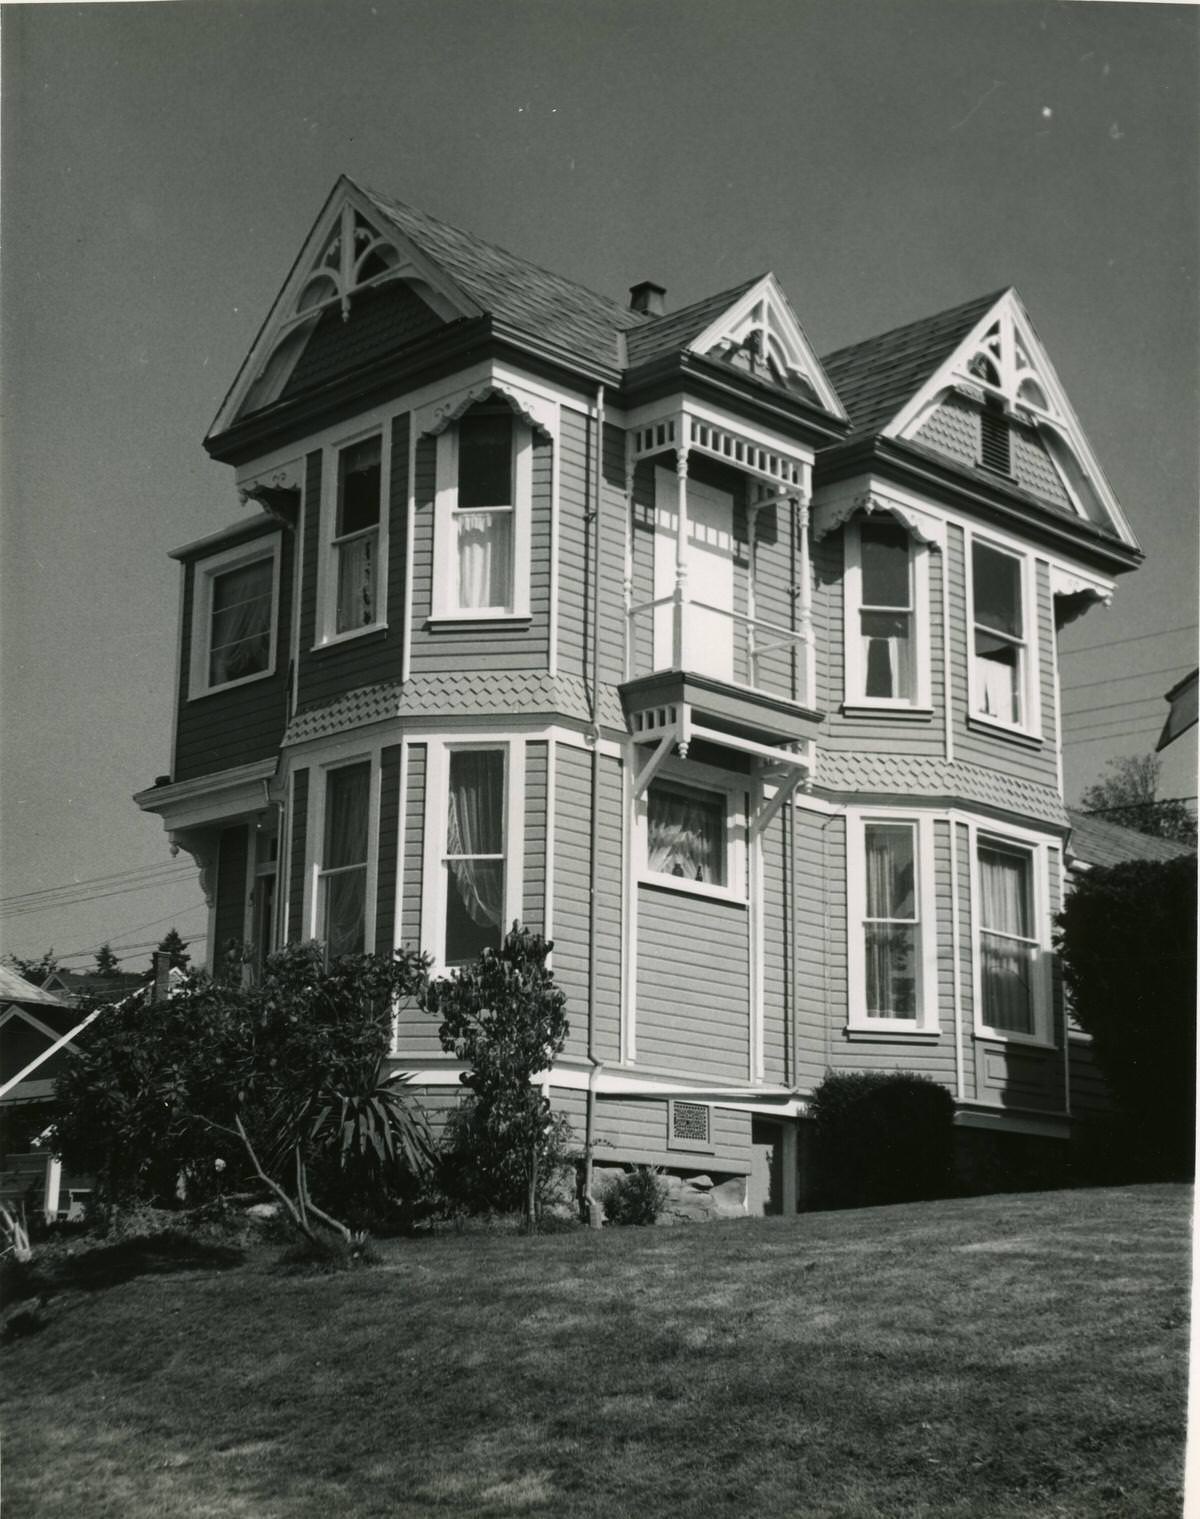 House on 15th Street, Bellingham, 1968